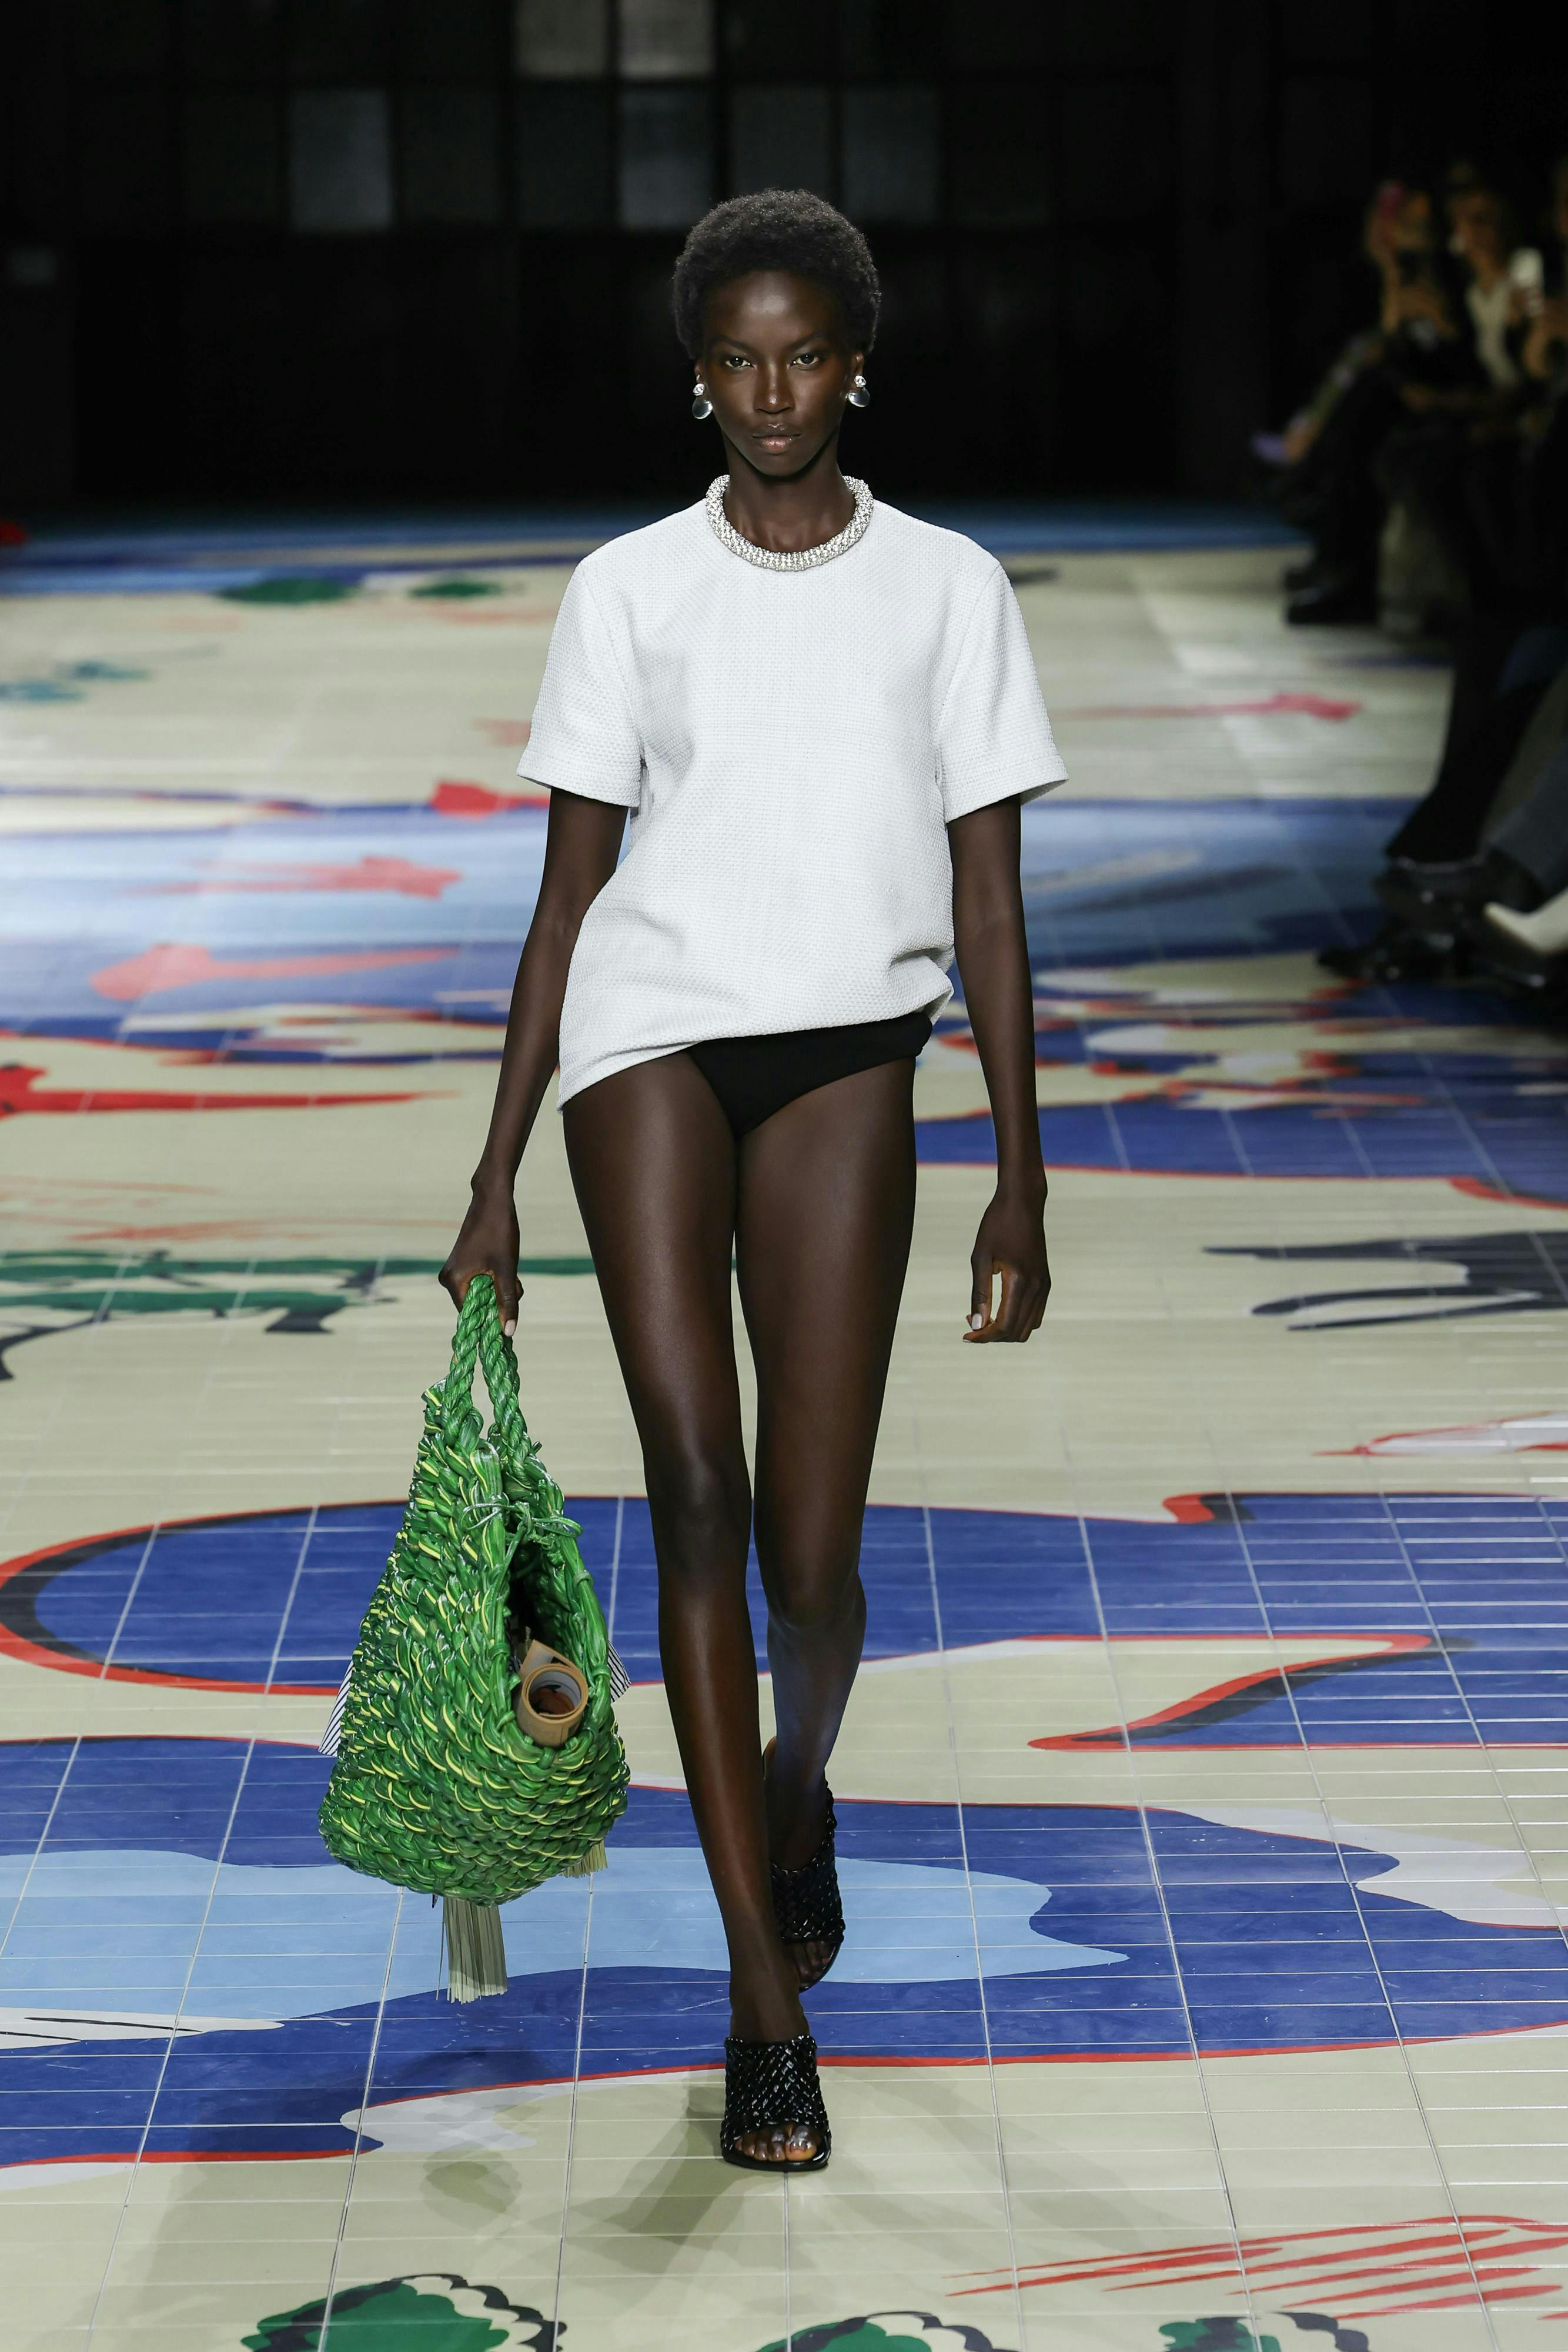 milan accessories bag handbag person fashion high heel purse adult female woman